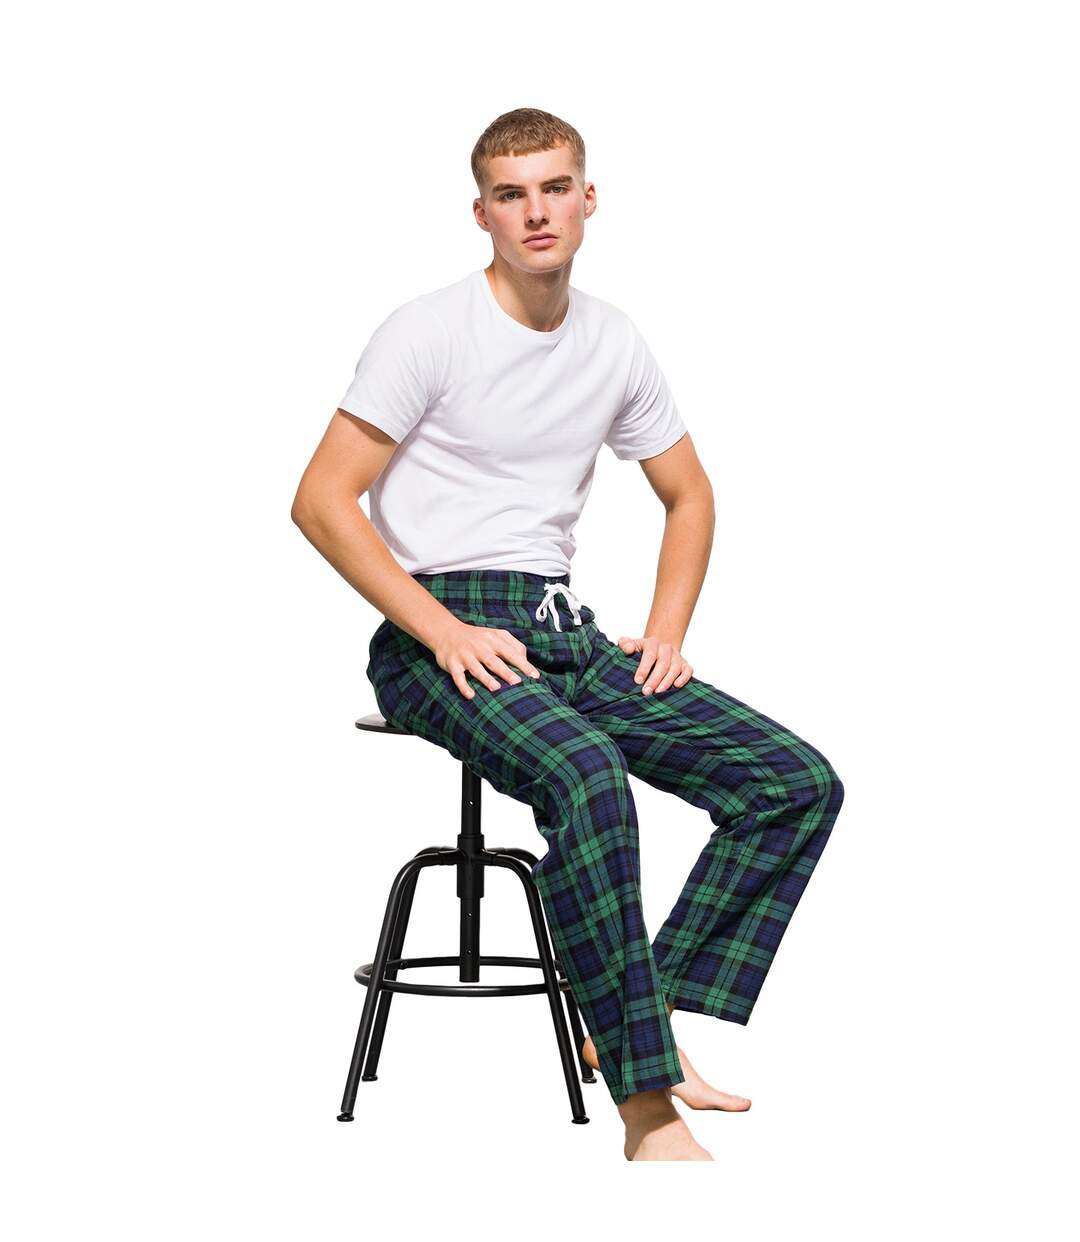 Skinnifit - Pantalon de pyjama en tartan - Homme (Bleu marine / vert) - UTRW6023